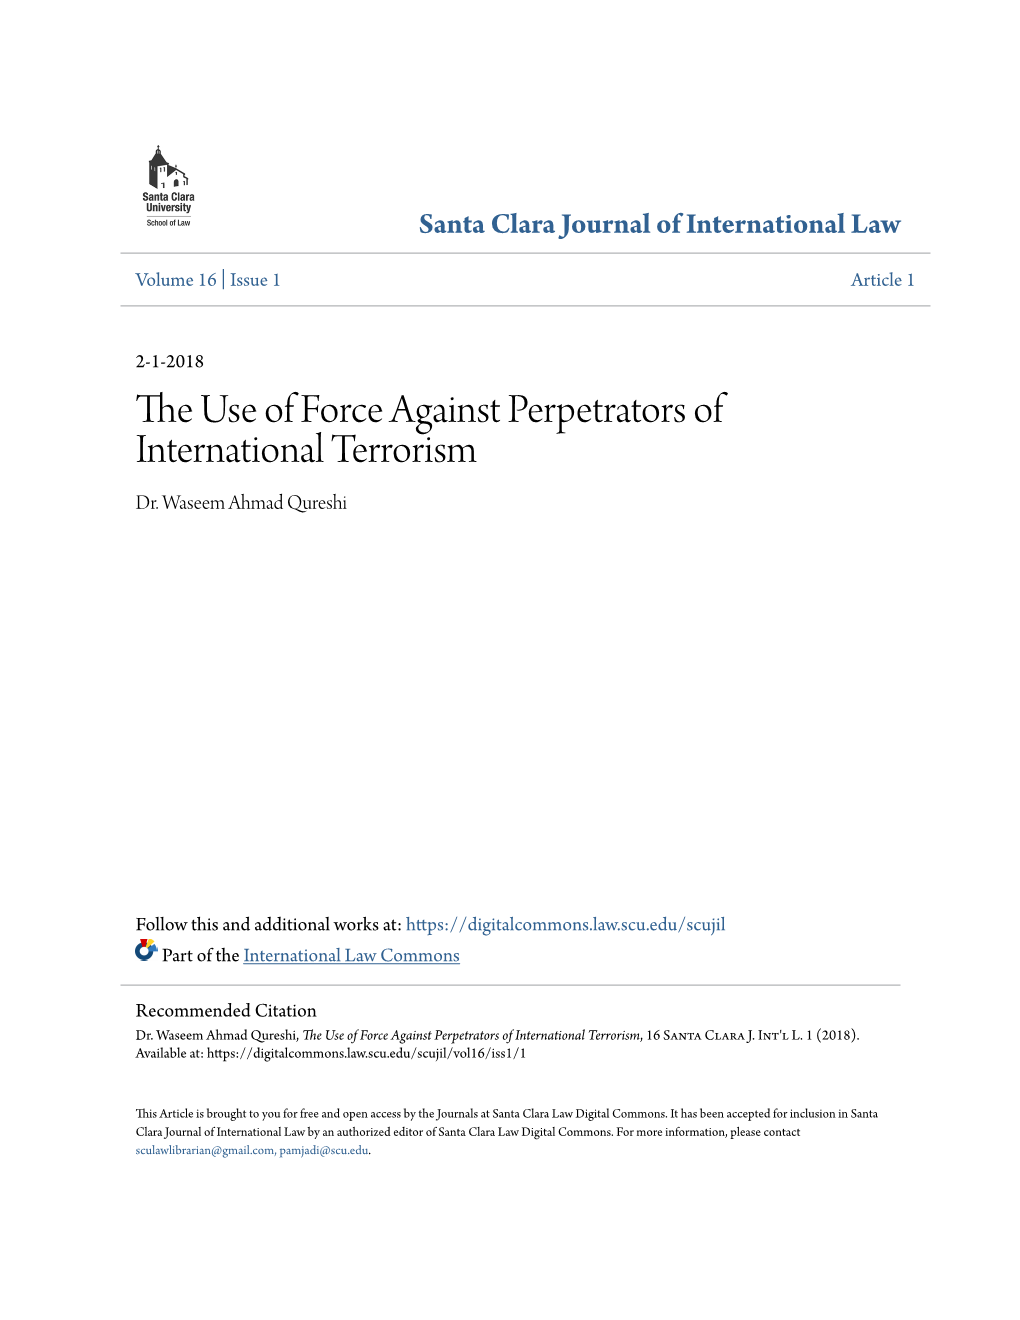 The Use of Force Against Perpetrators of International Terrorism, 16 Santa Clara J